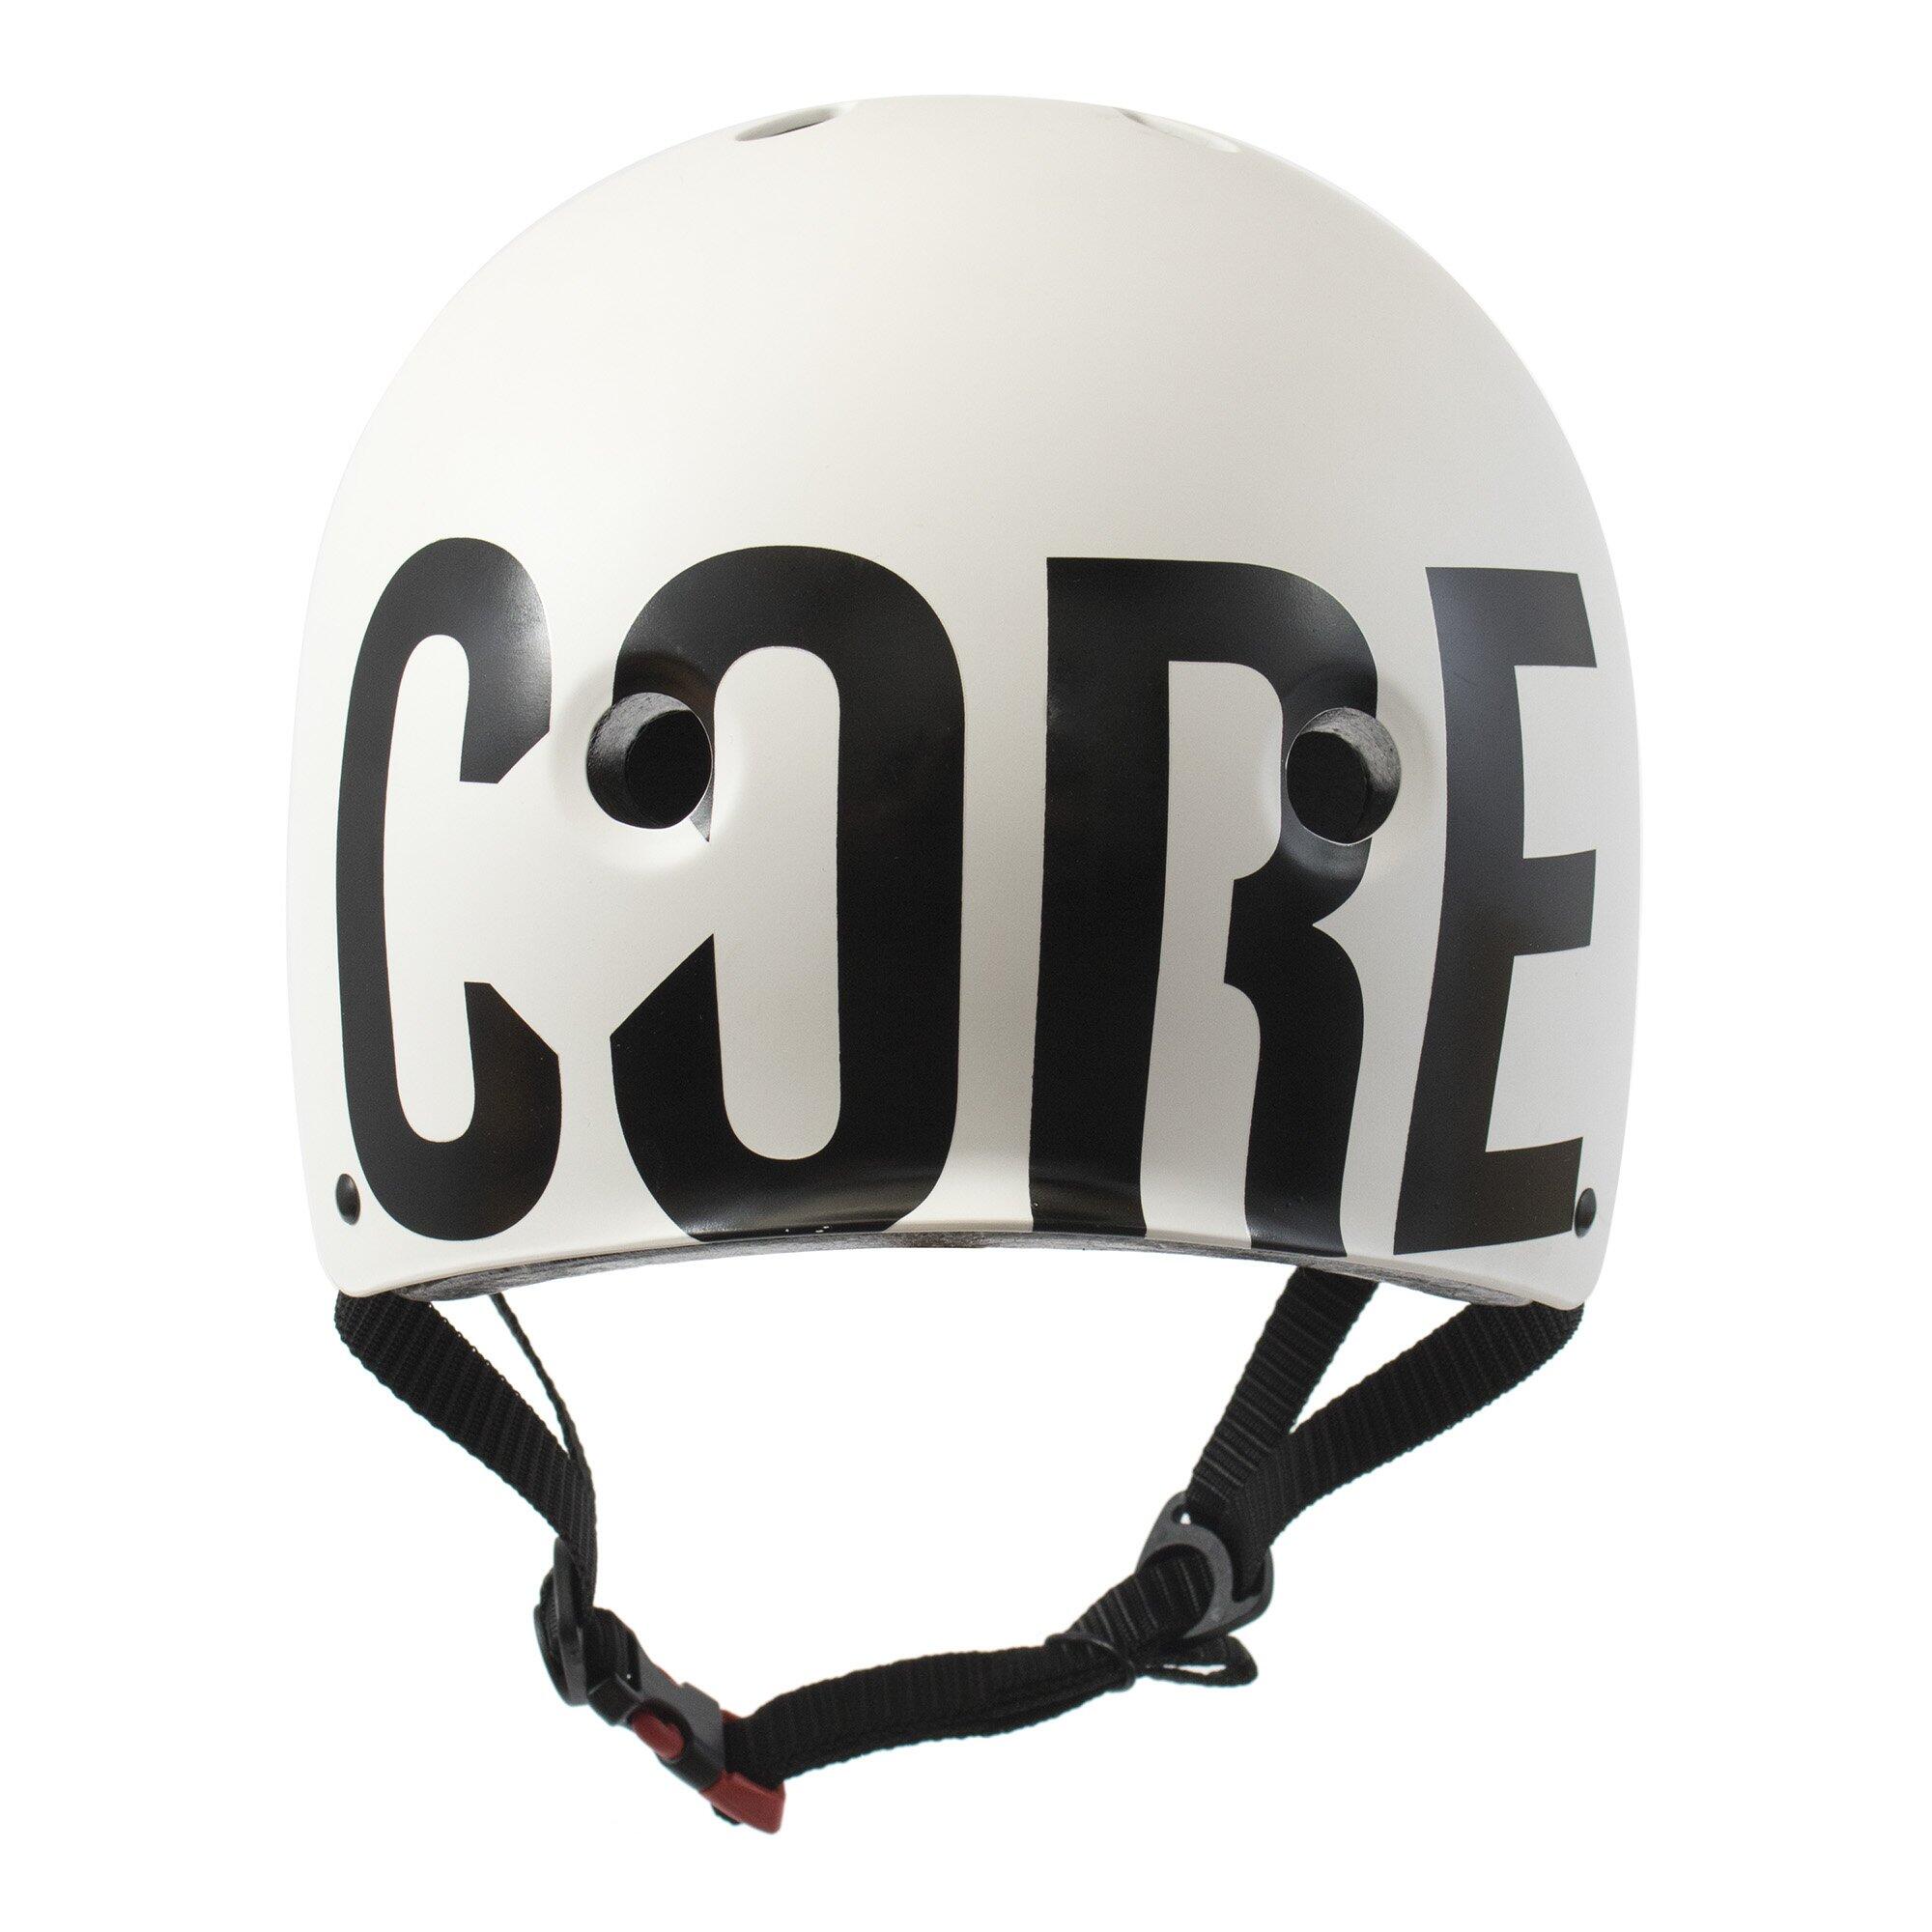 CORE Street Helmet White 2/5